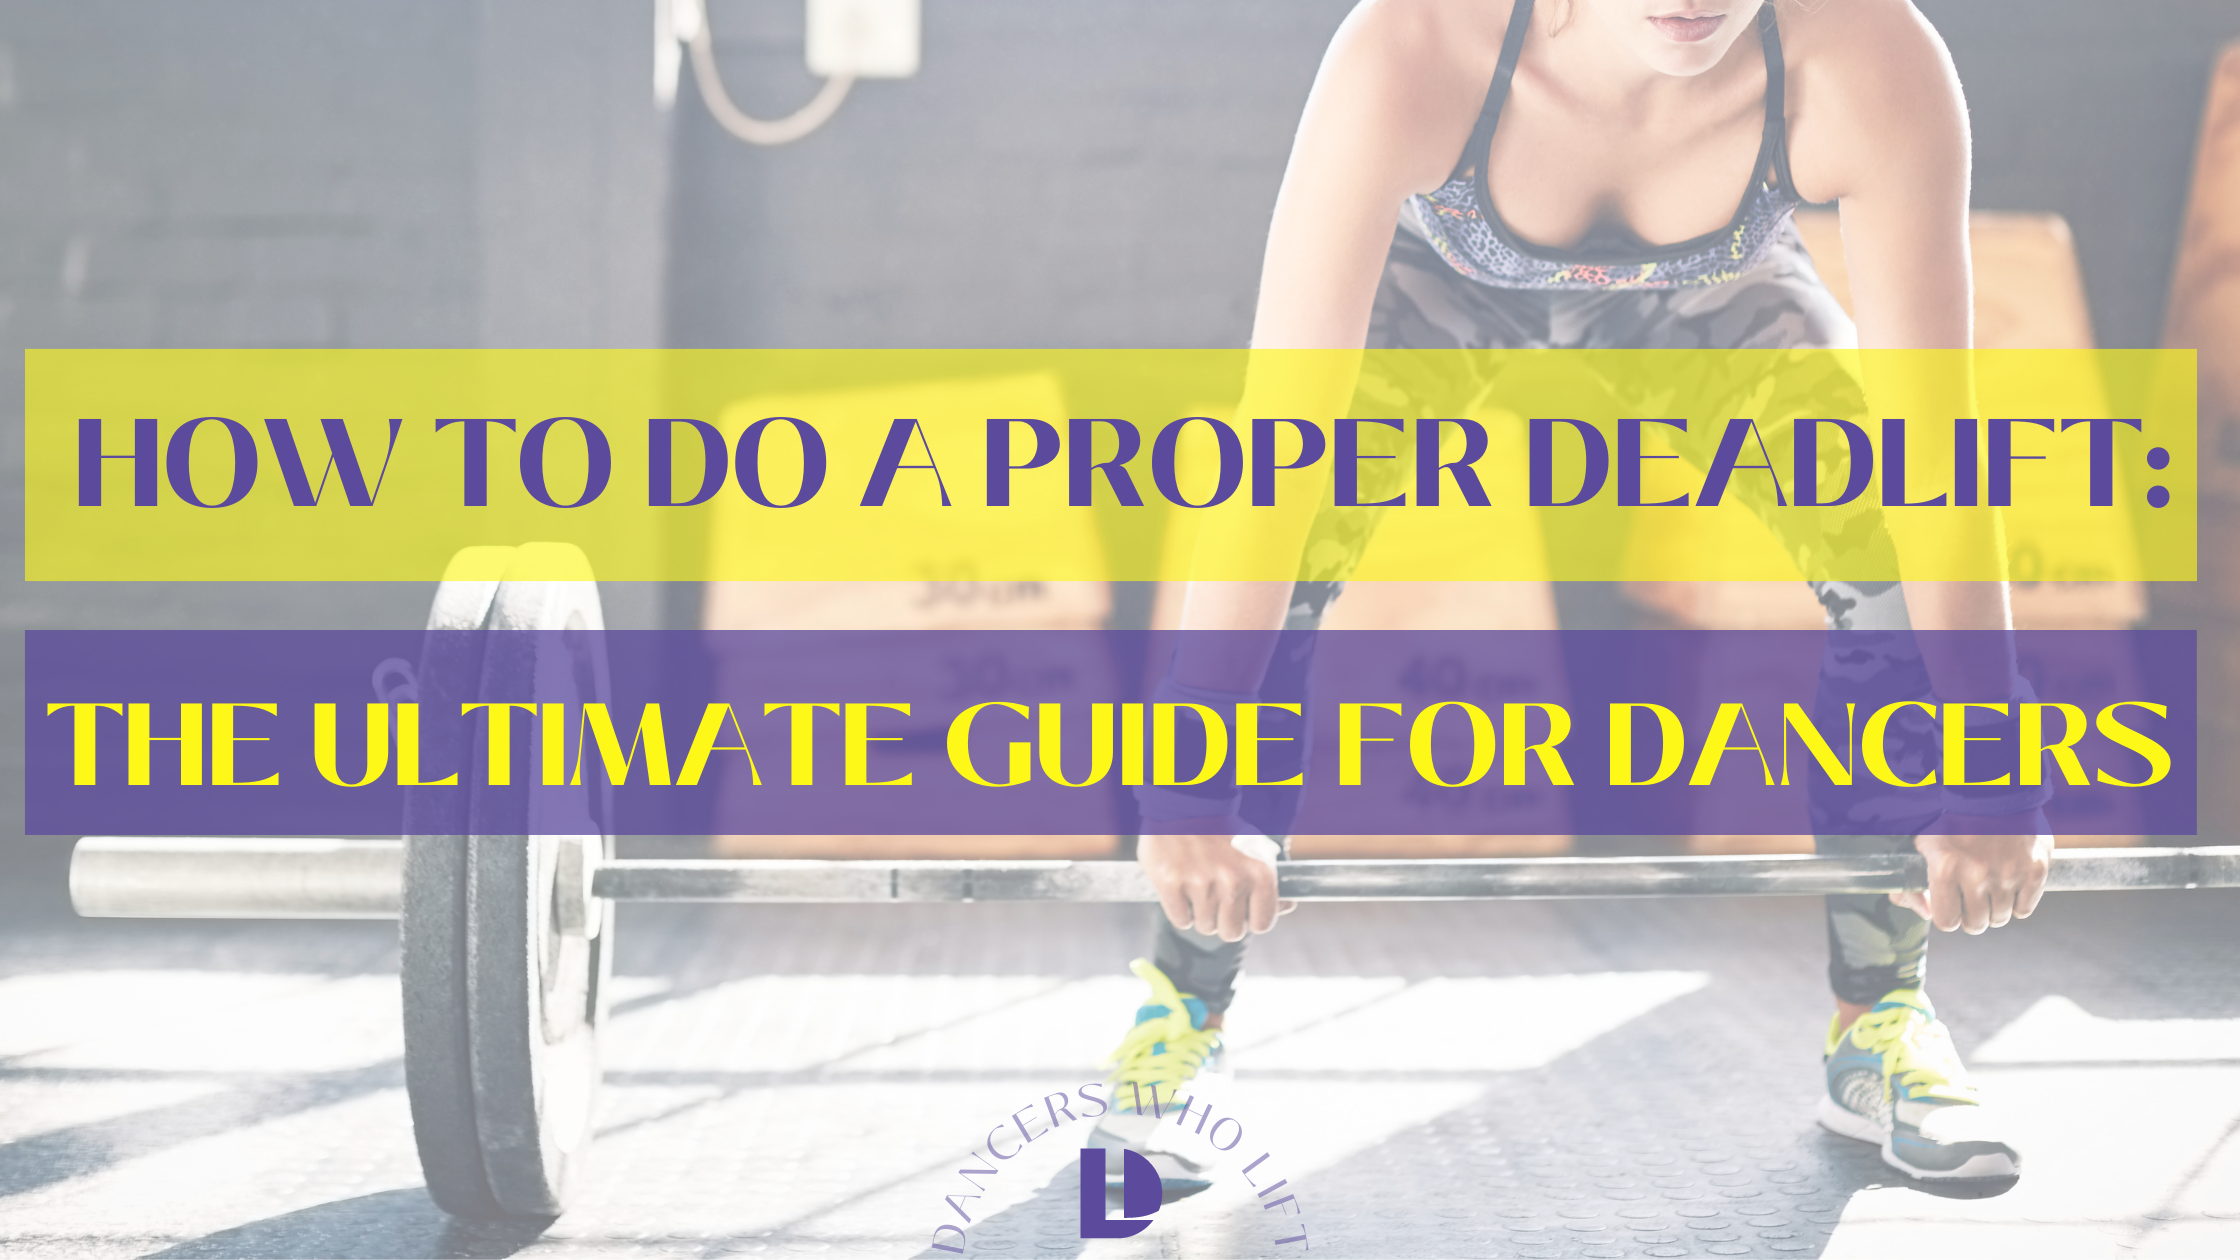 How to do a proper deadlift